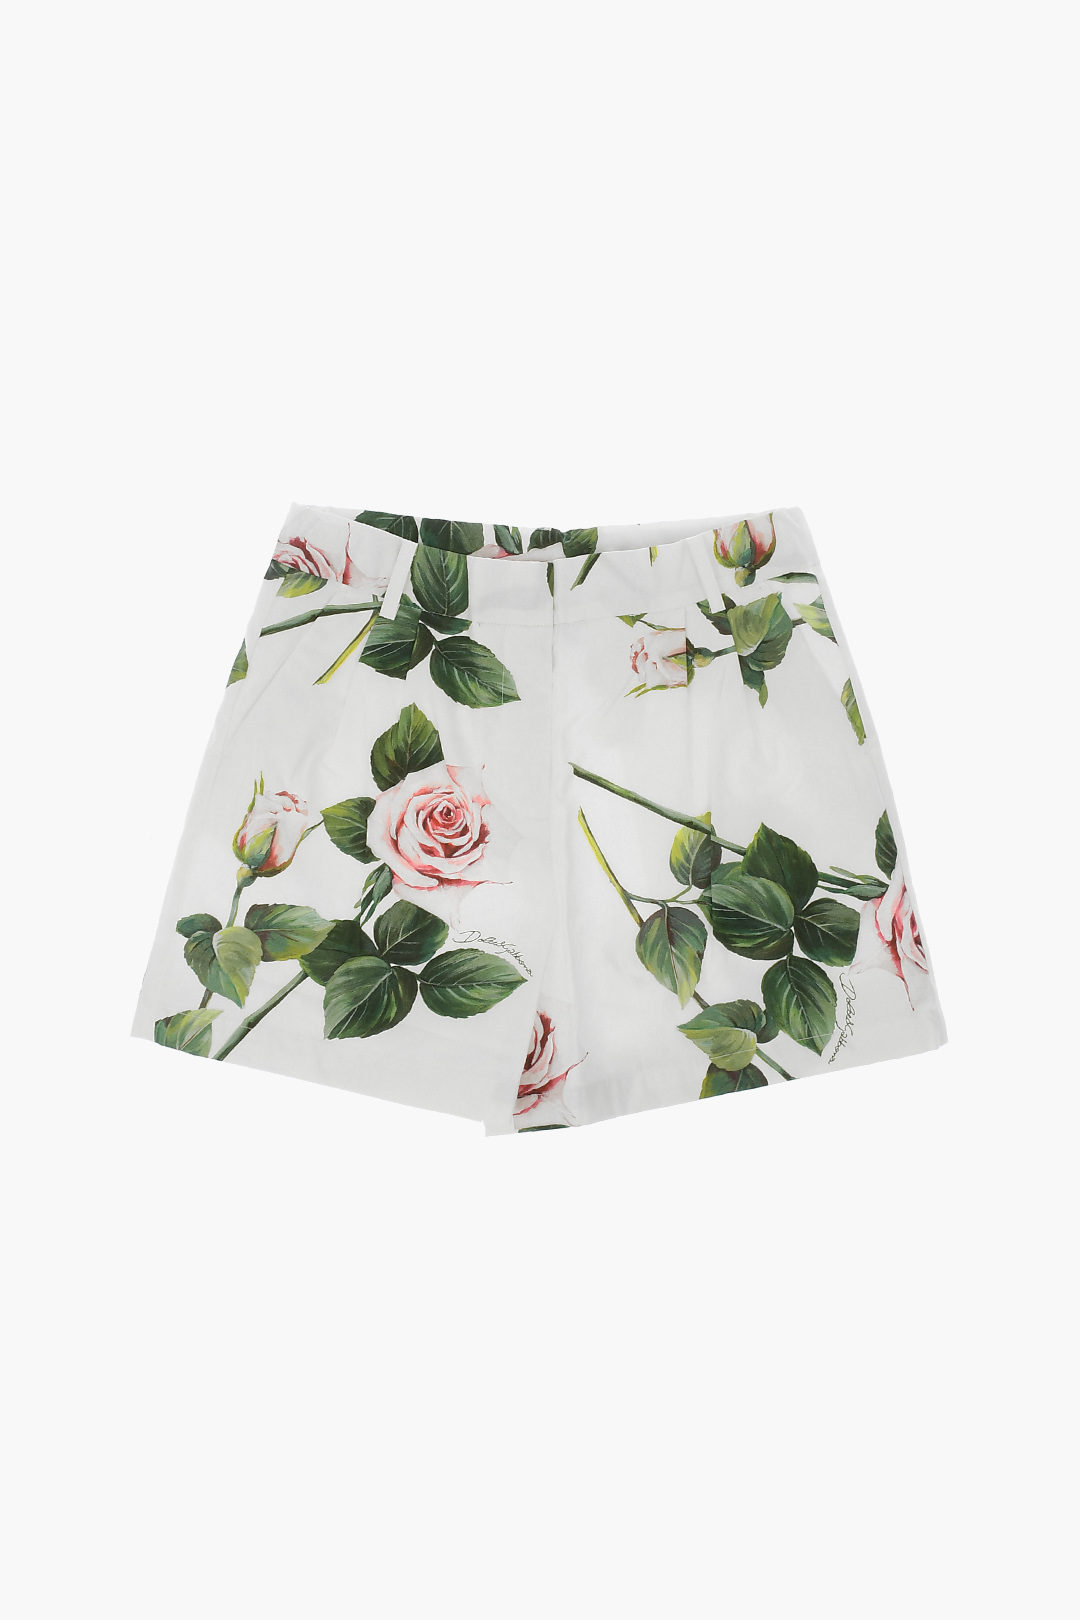 Dolce & Gabbana Kids Floral Shorts girls - Glamood Outlet